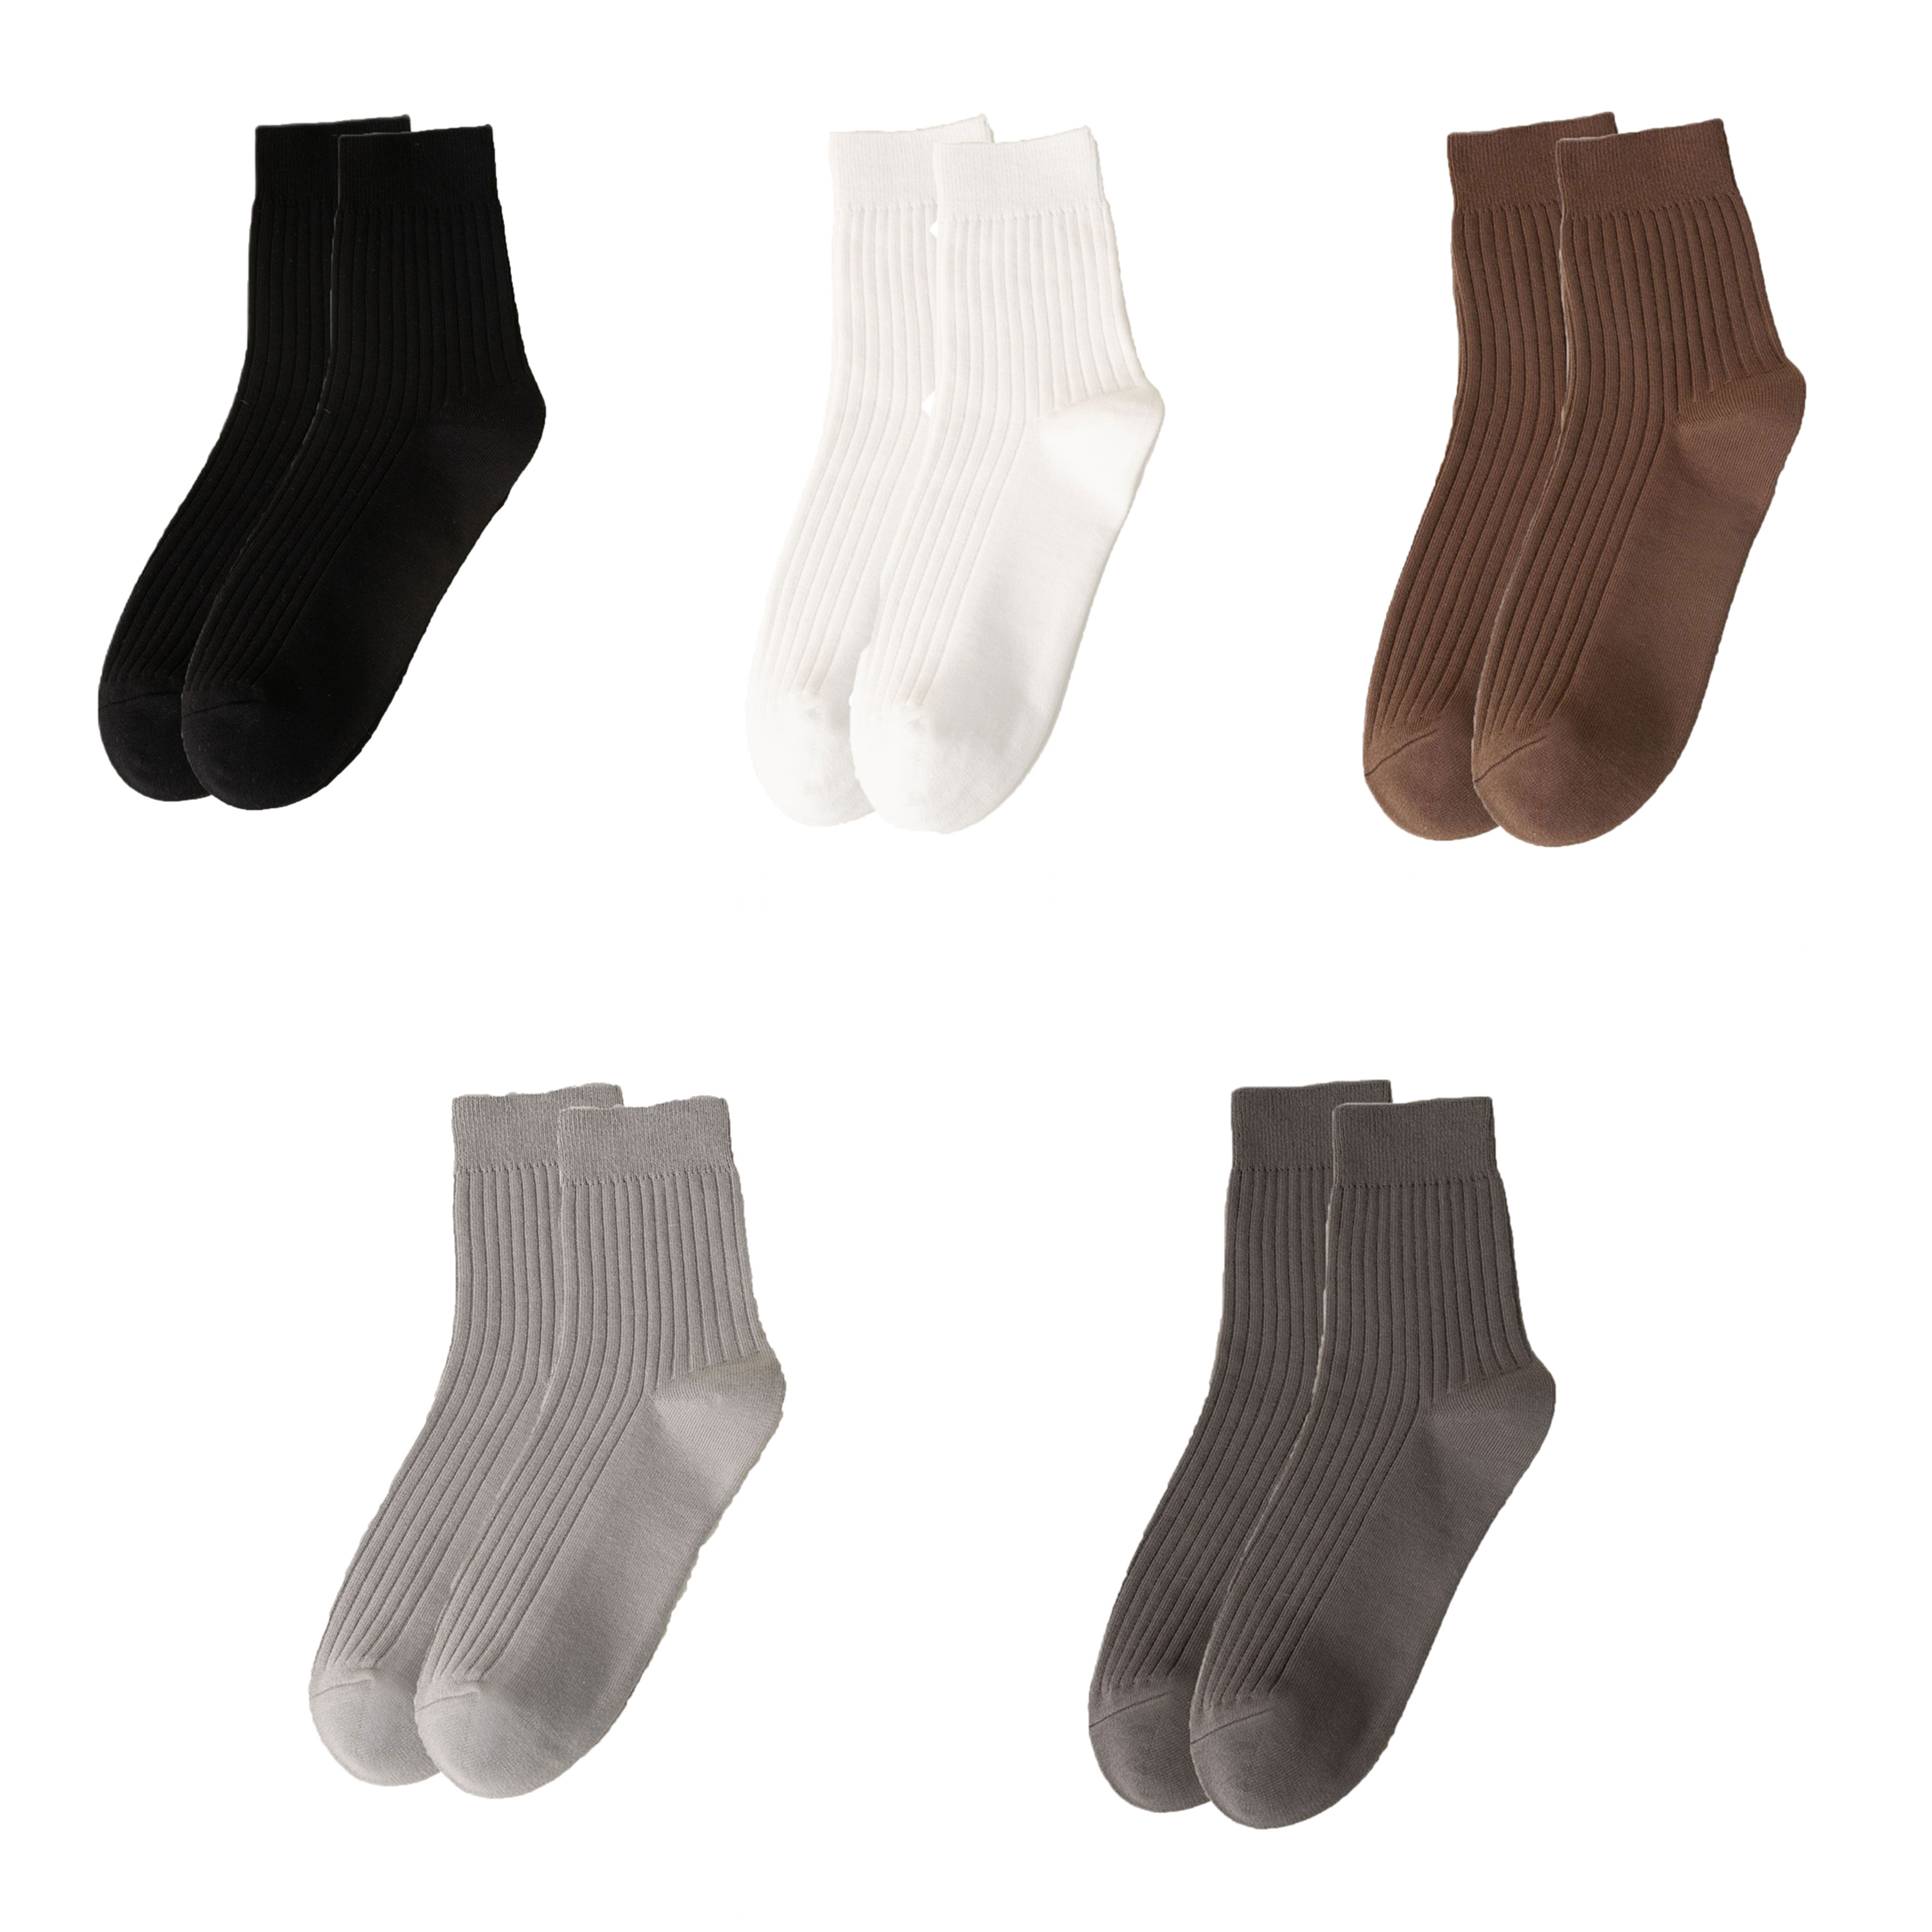 5 Pairs Cotton Socks for Men Five Color Combo Durable Socks Resistant to Pilling Socks Medium Length